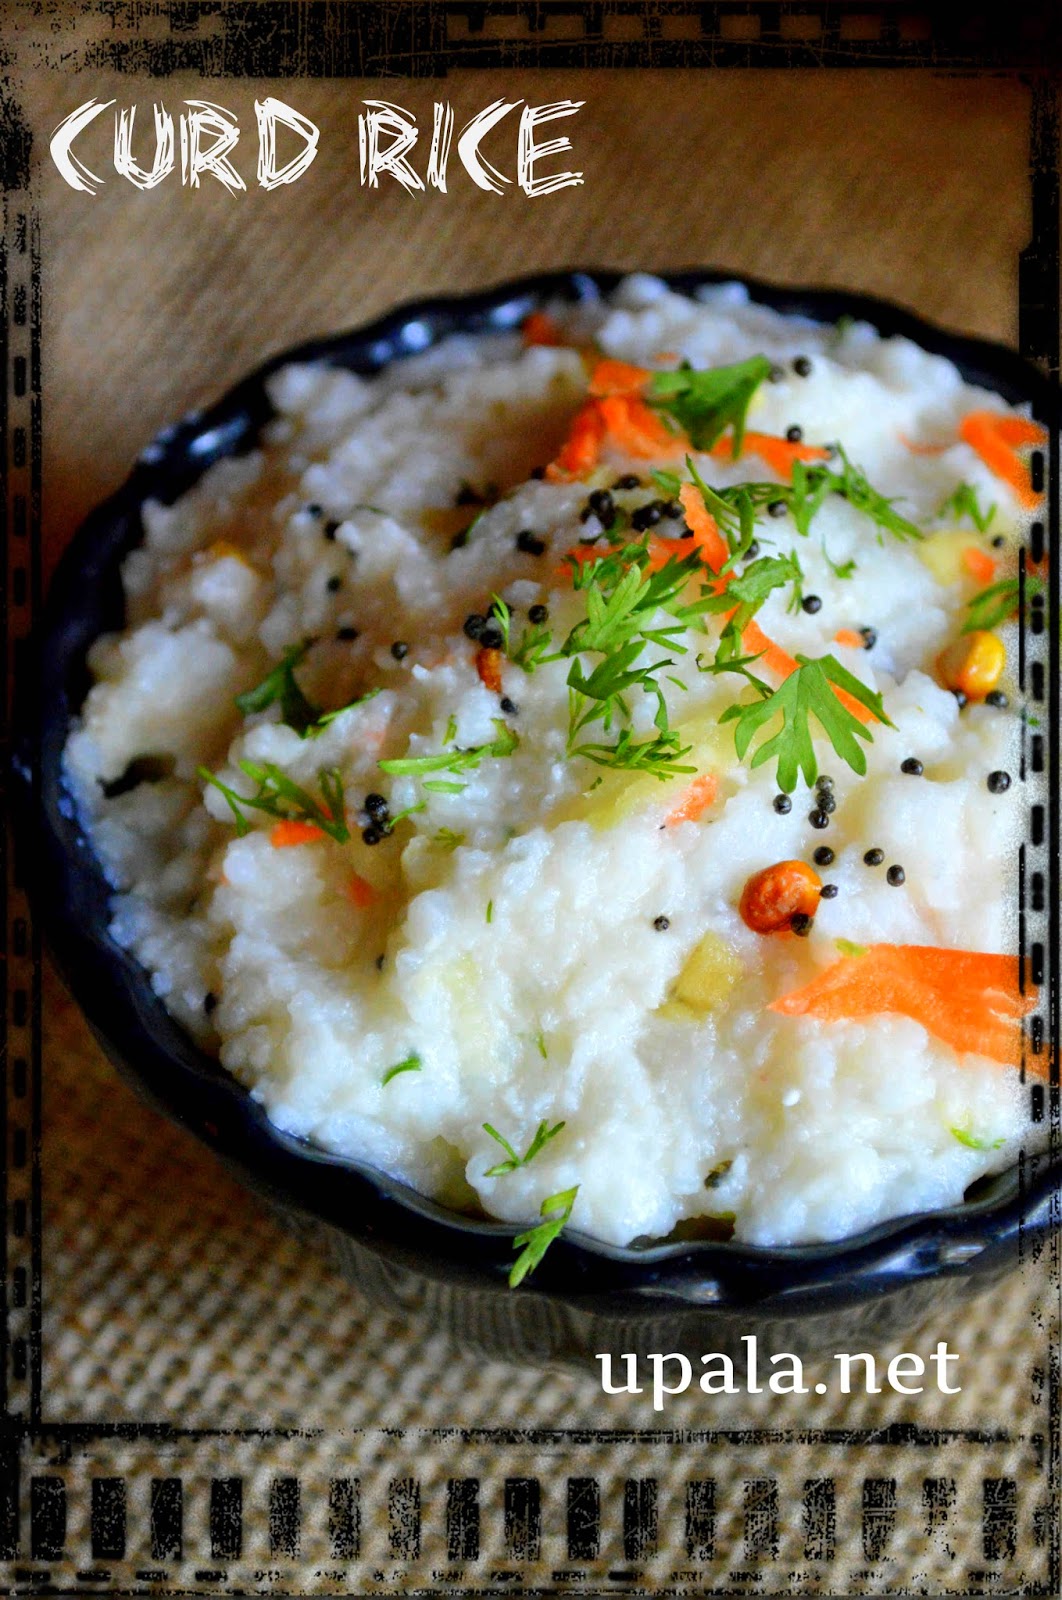 Curd rice